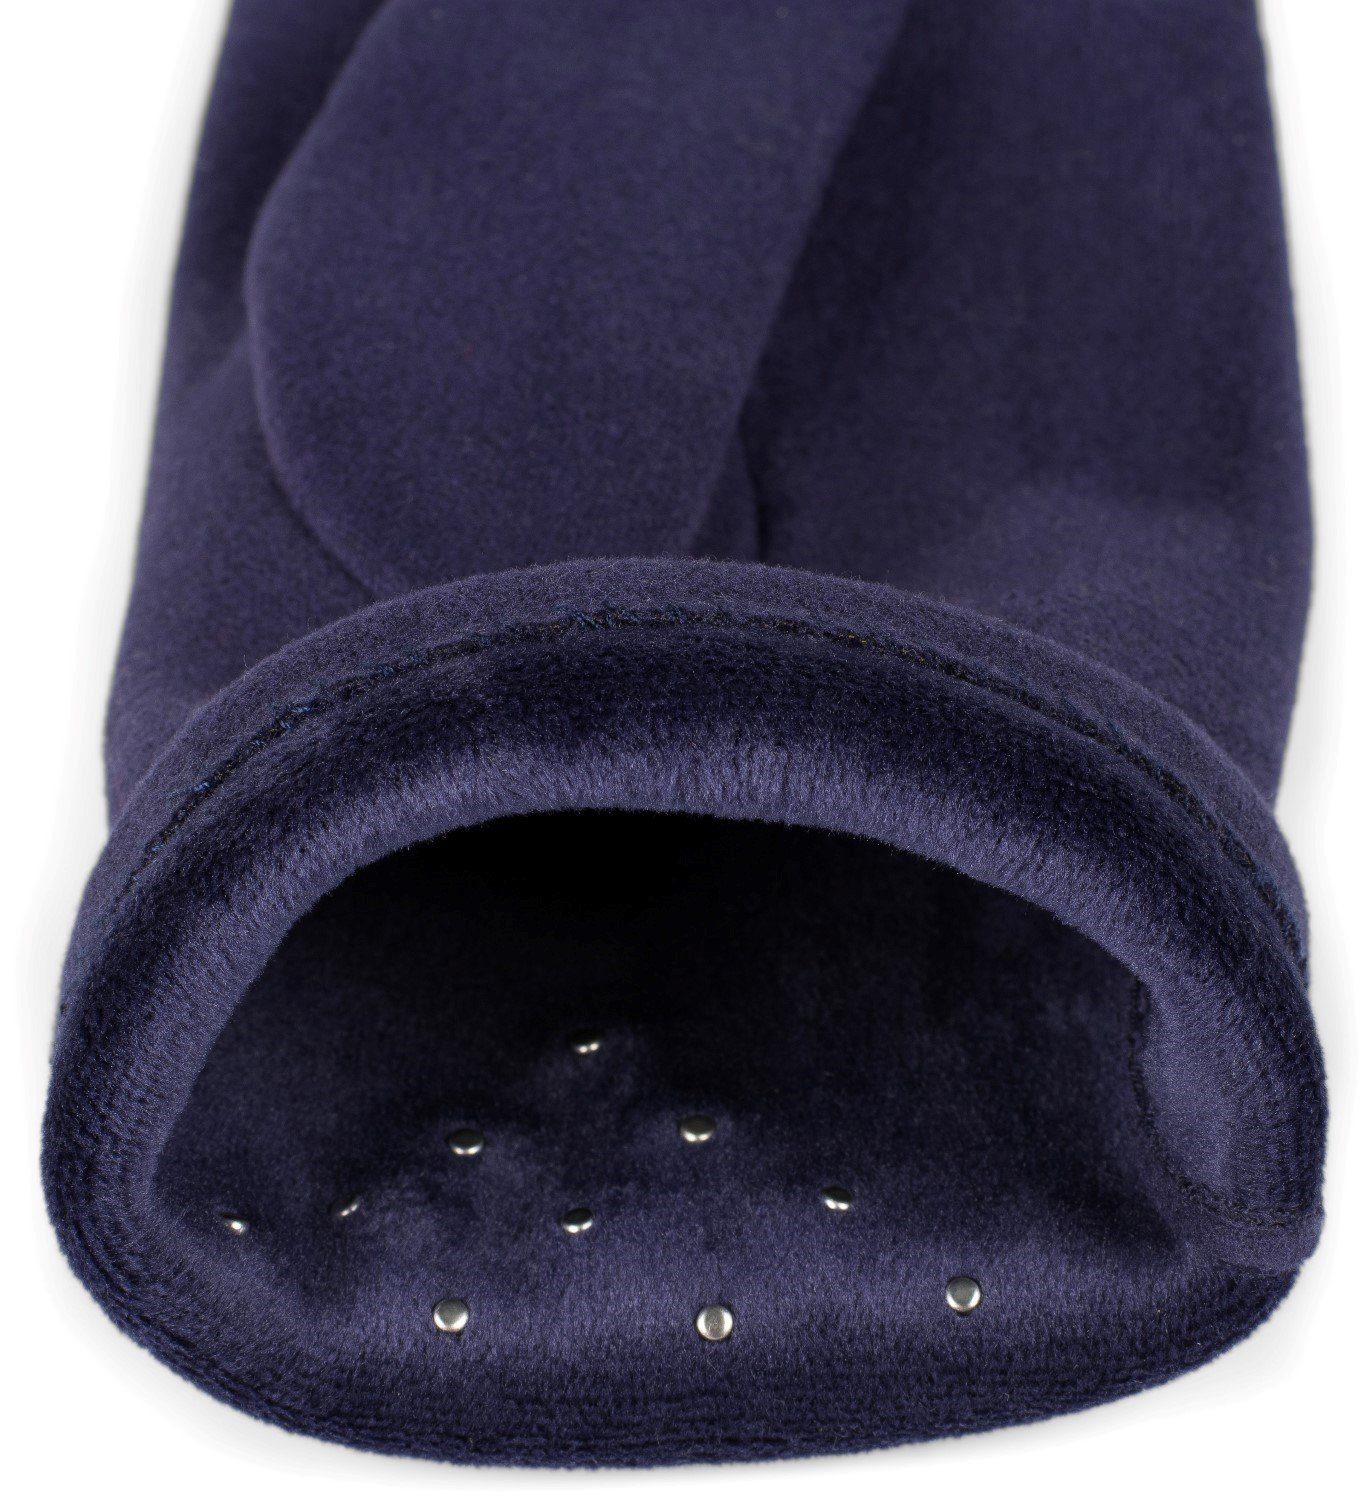 Dunkelblau und Handschuhe mit styleBREAKER Fleecehandschuhe Touchscreen Strass Perlen